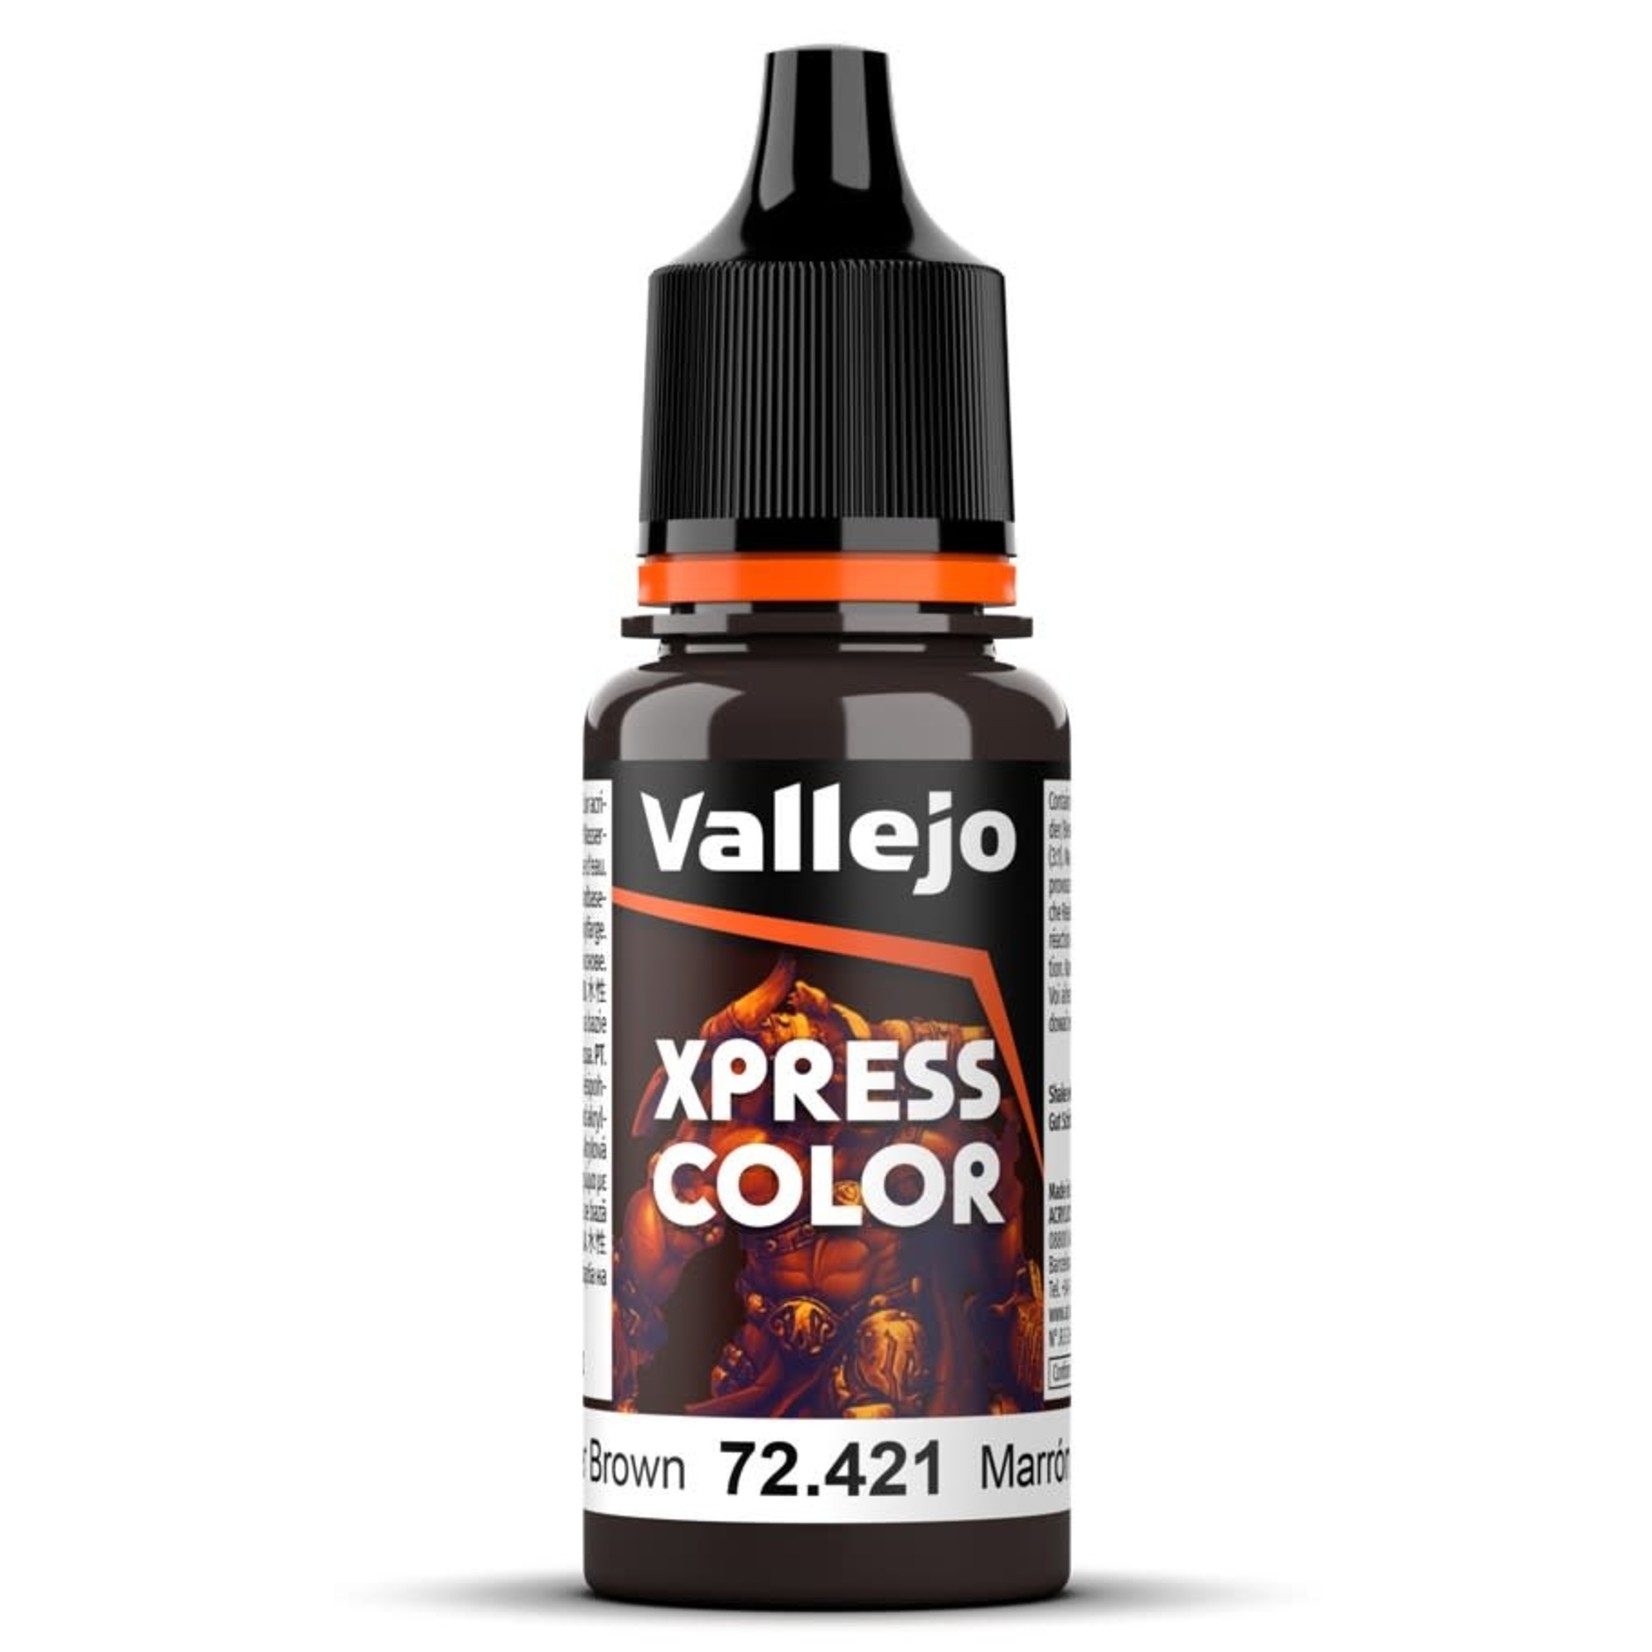 Vallejo Paint: Xpress (Copper Brown)